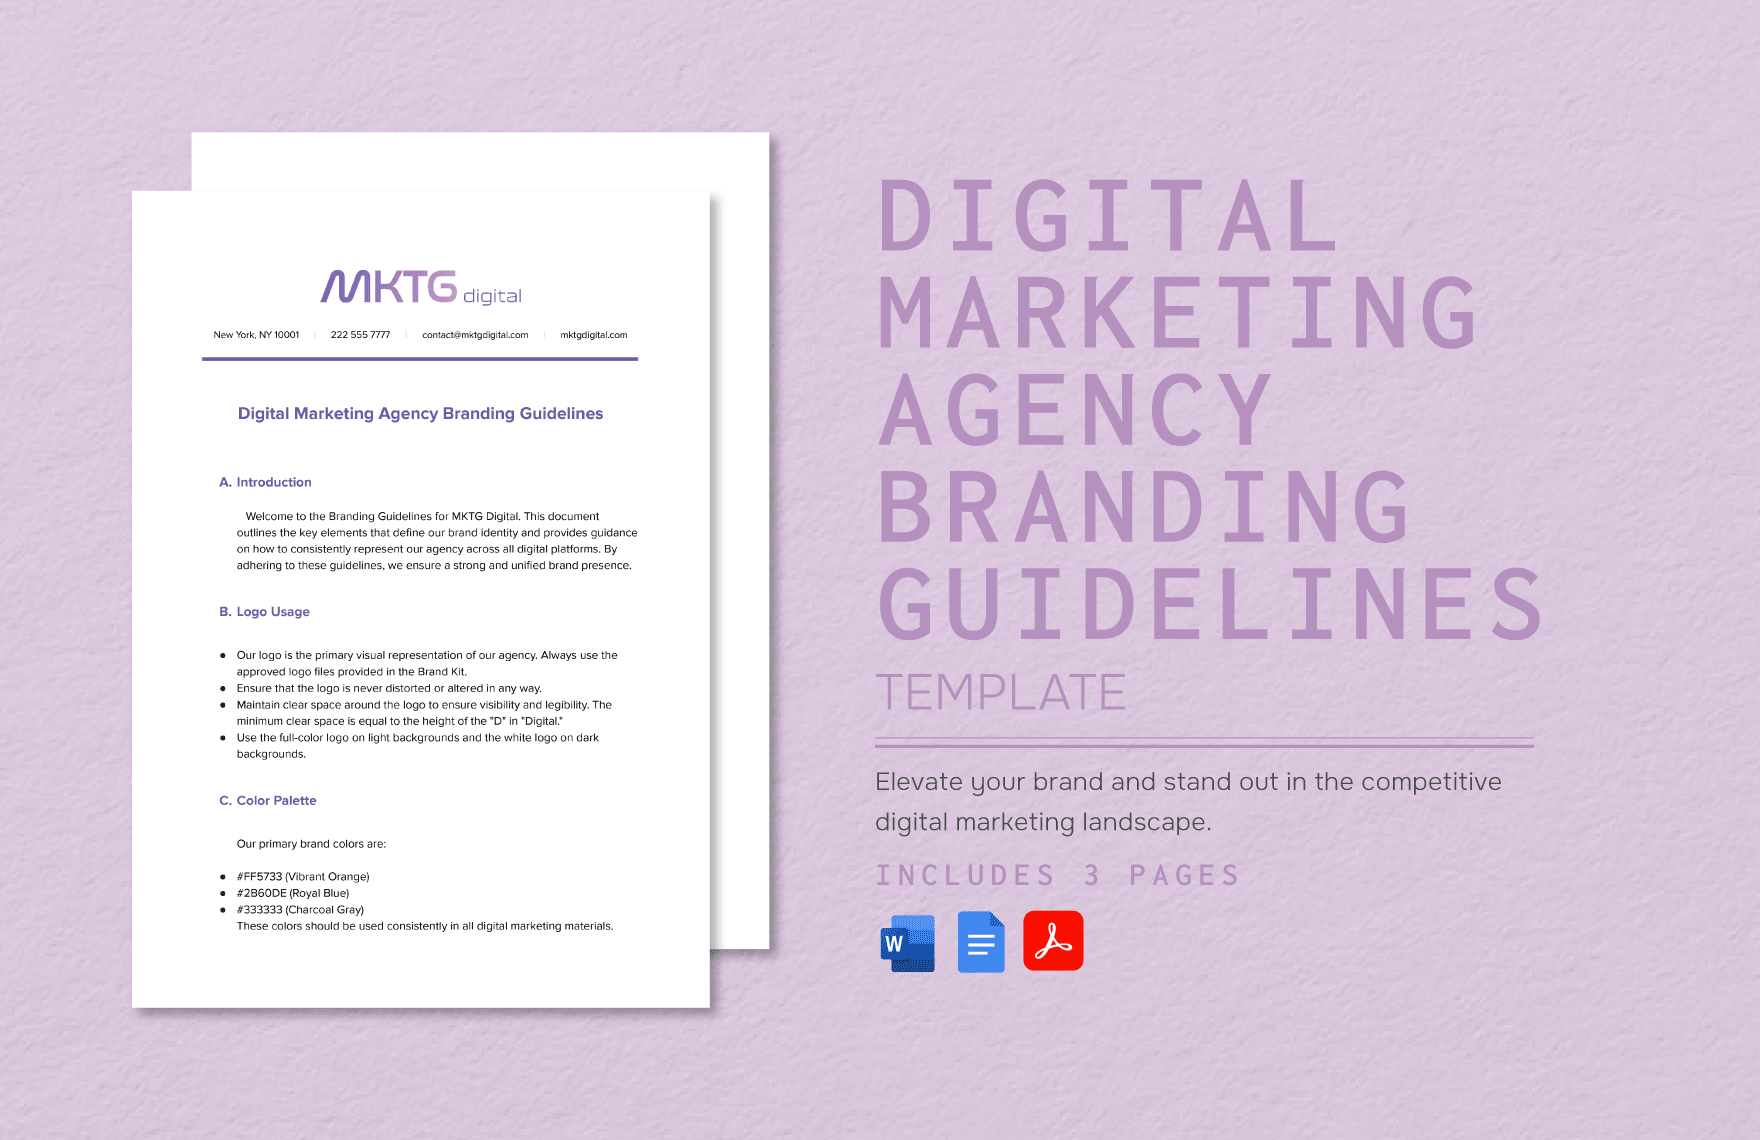 Digital Marketing Agency Branding Guidelines Template in Word, Google Docs, PDF